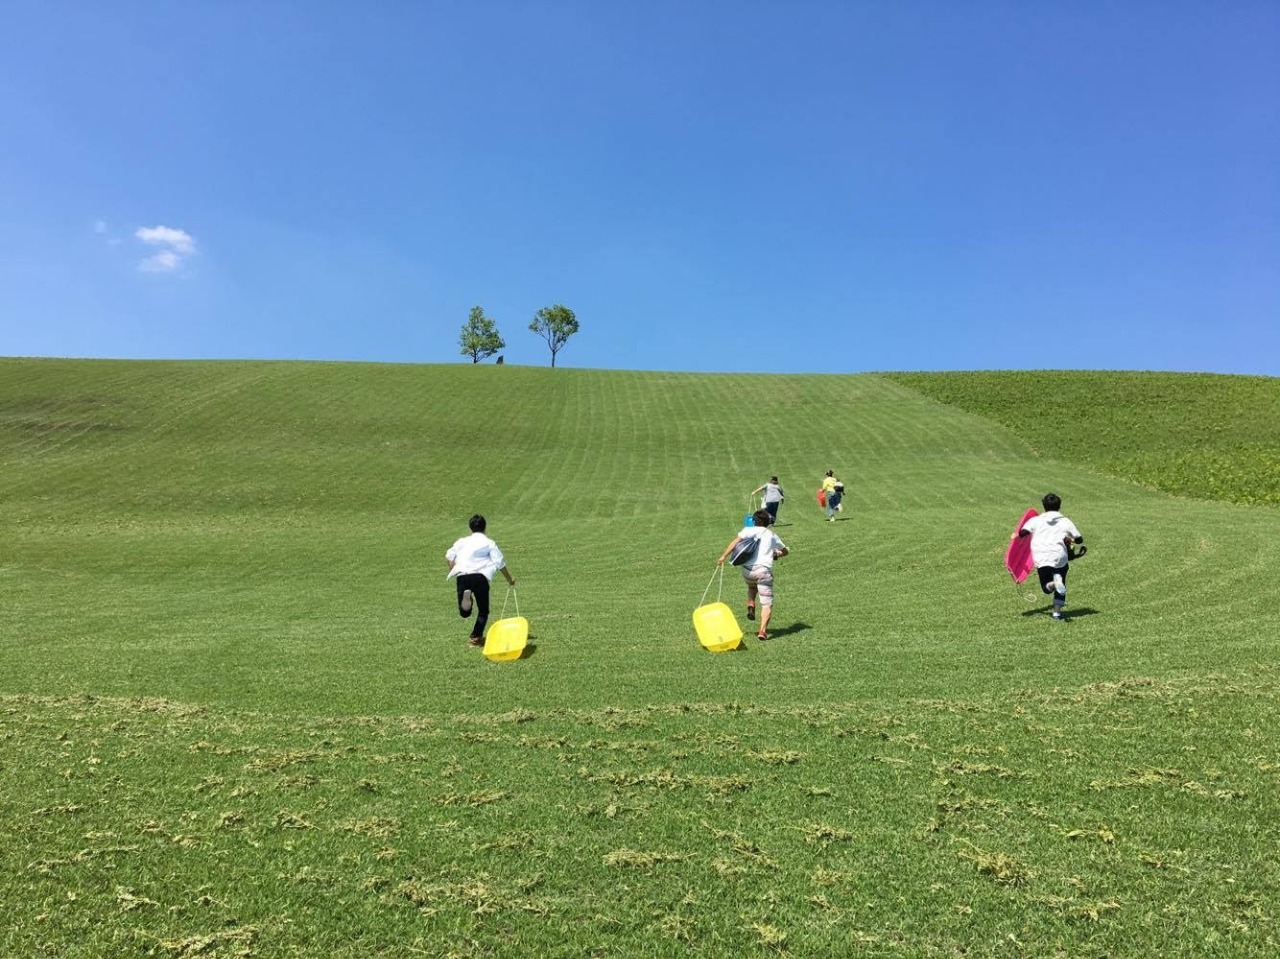 Kuju Kogen Doshin Kaiki Farm Experience the Thrill of Sledding Down a Steep Hill on Grass Sleds